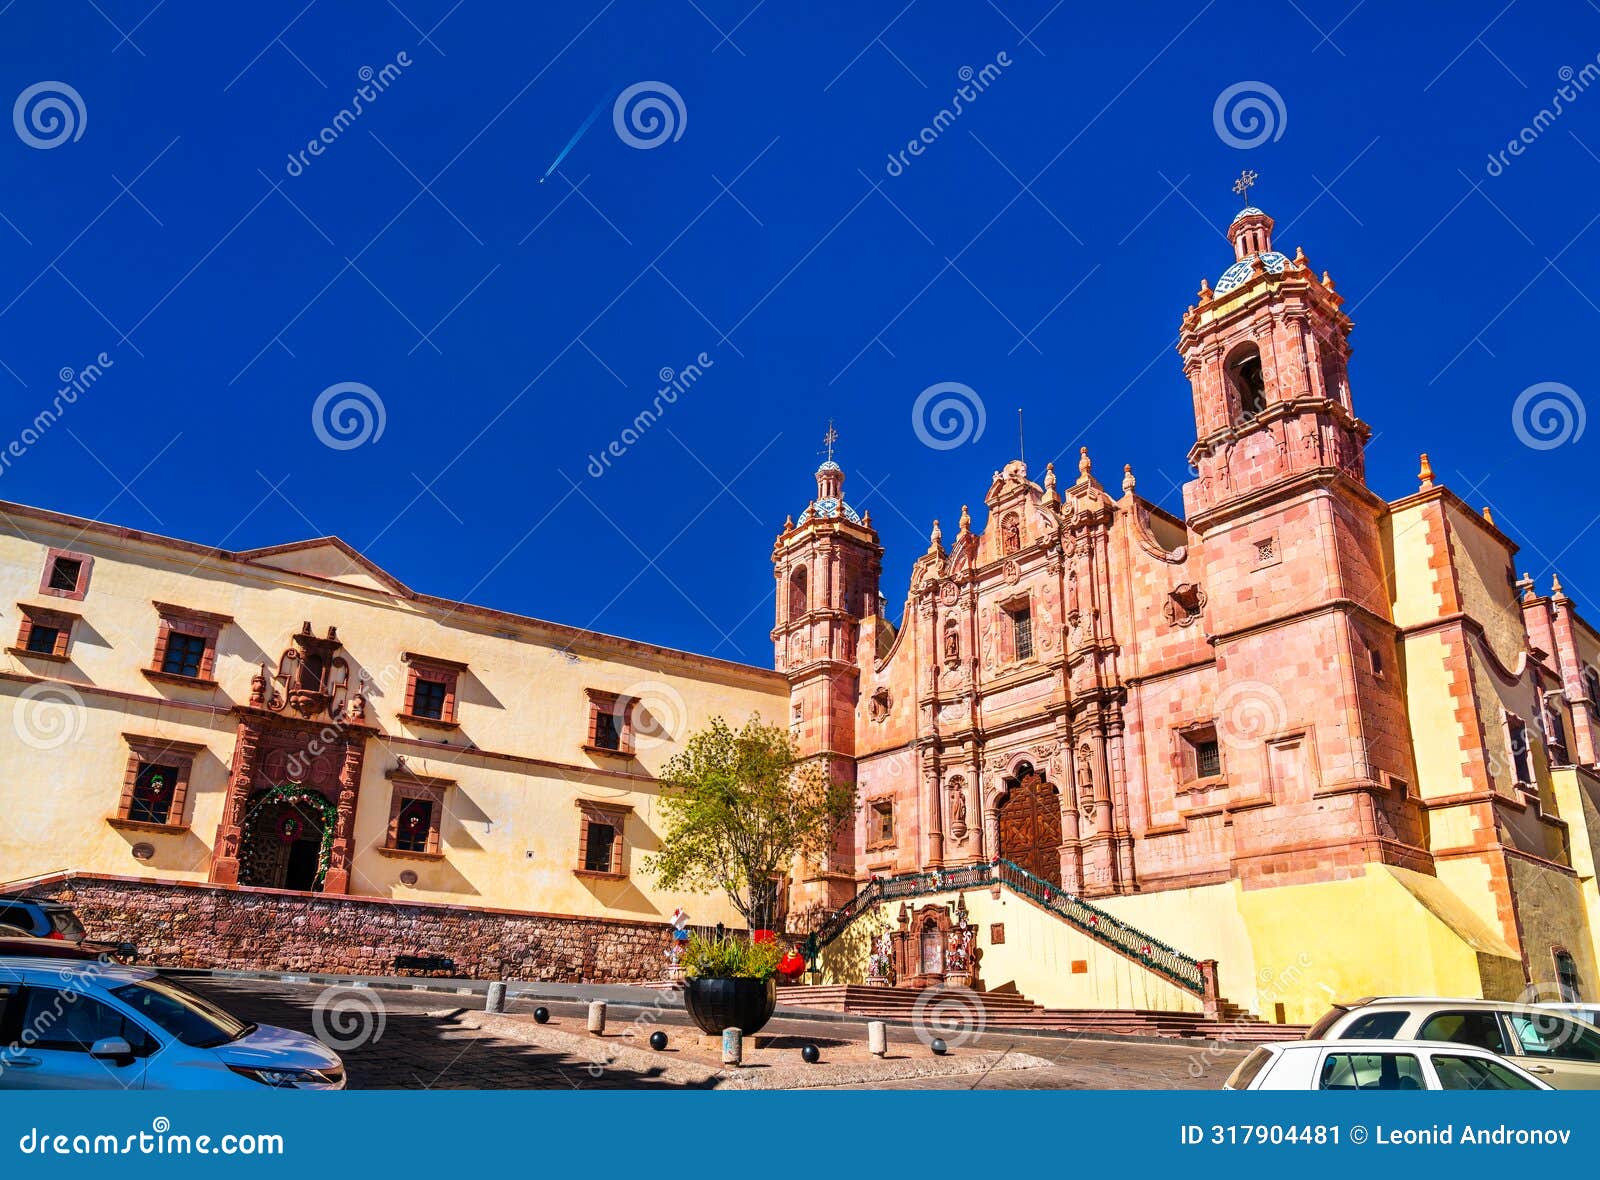 santo domingo church in zacatecas, mexico